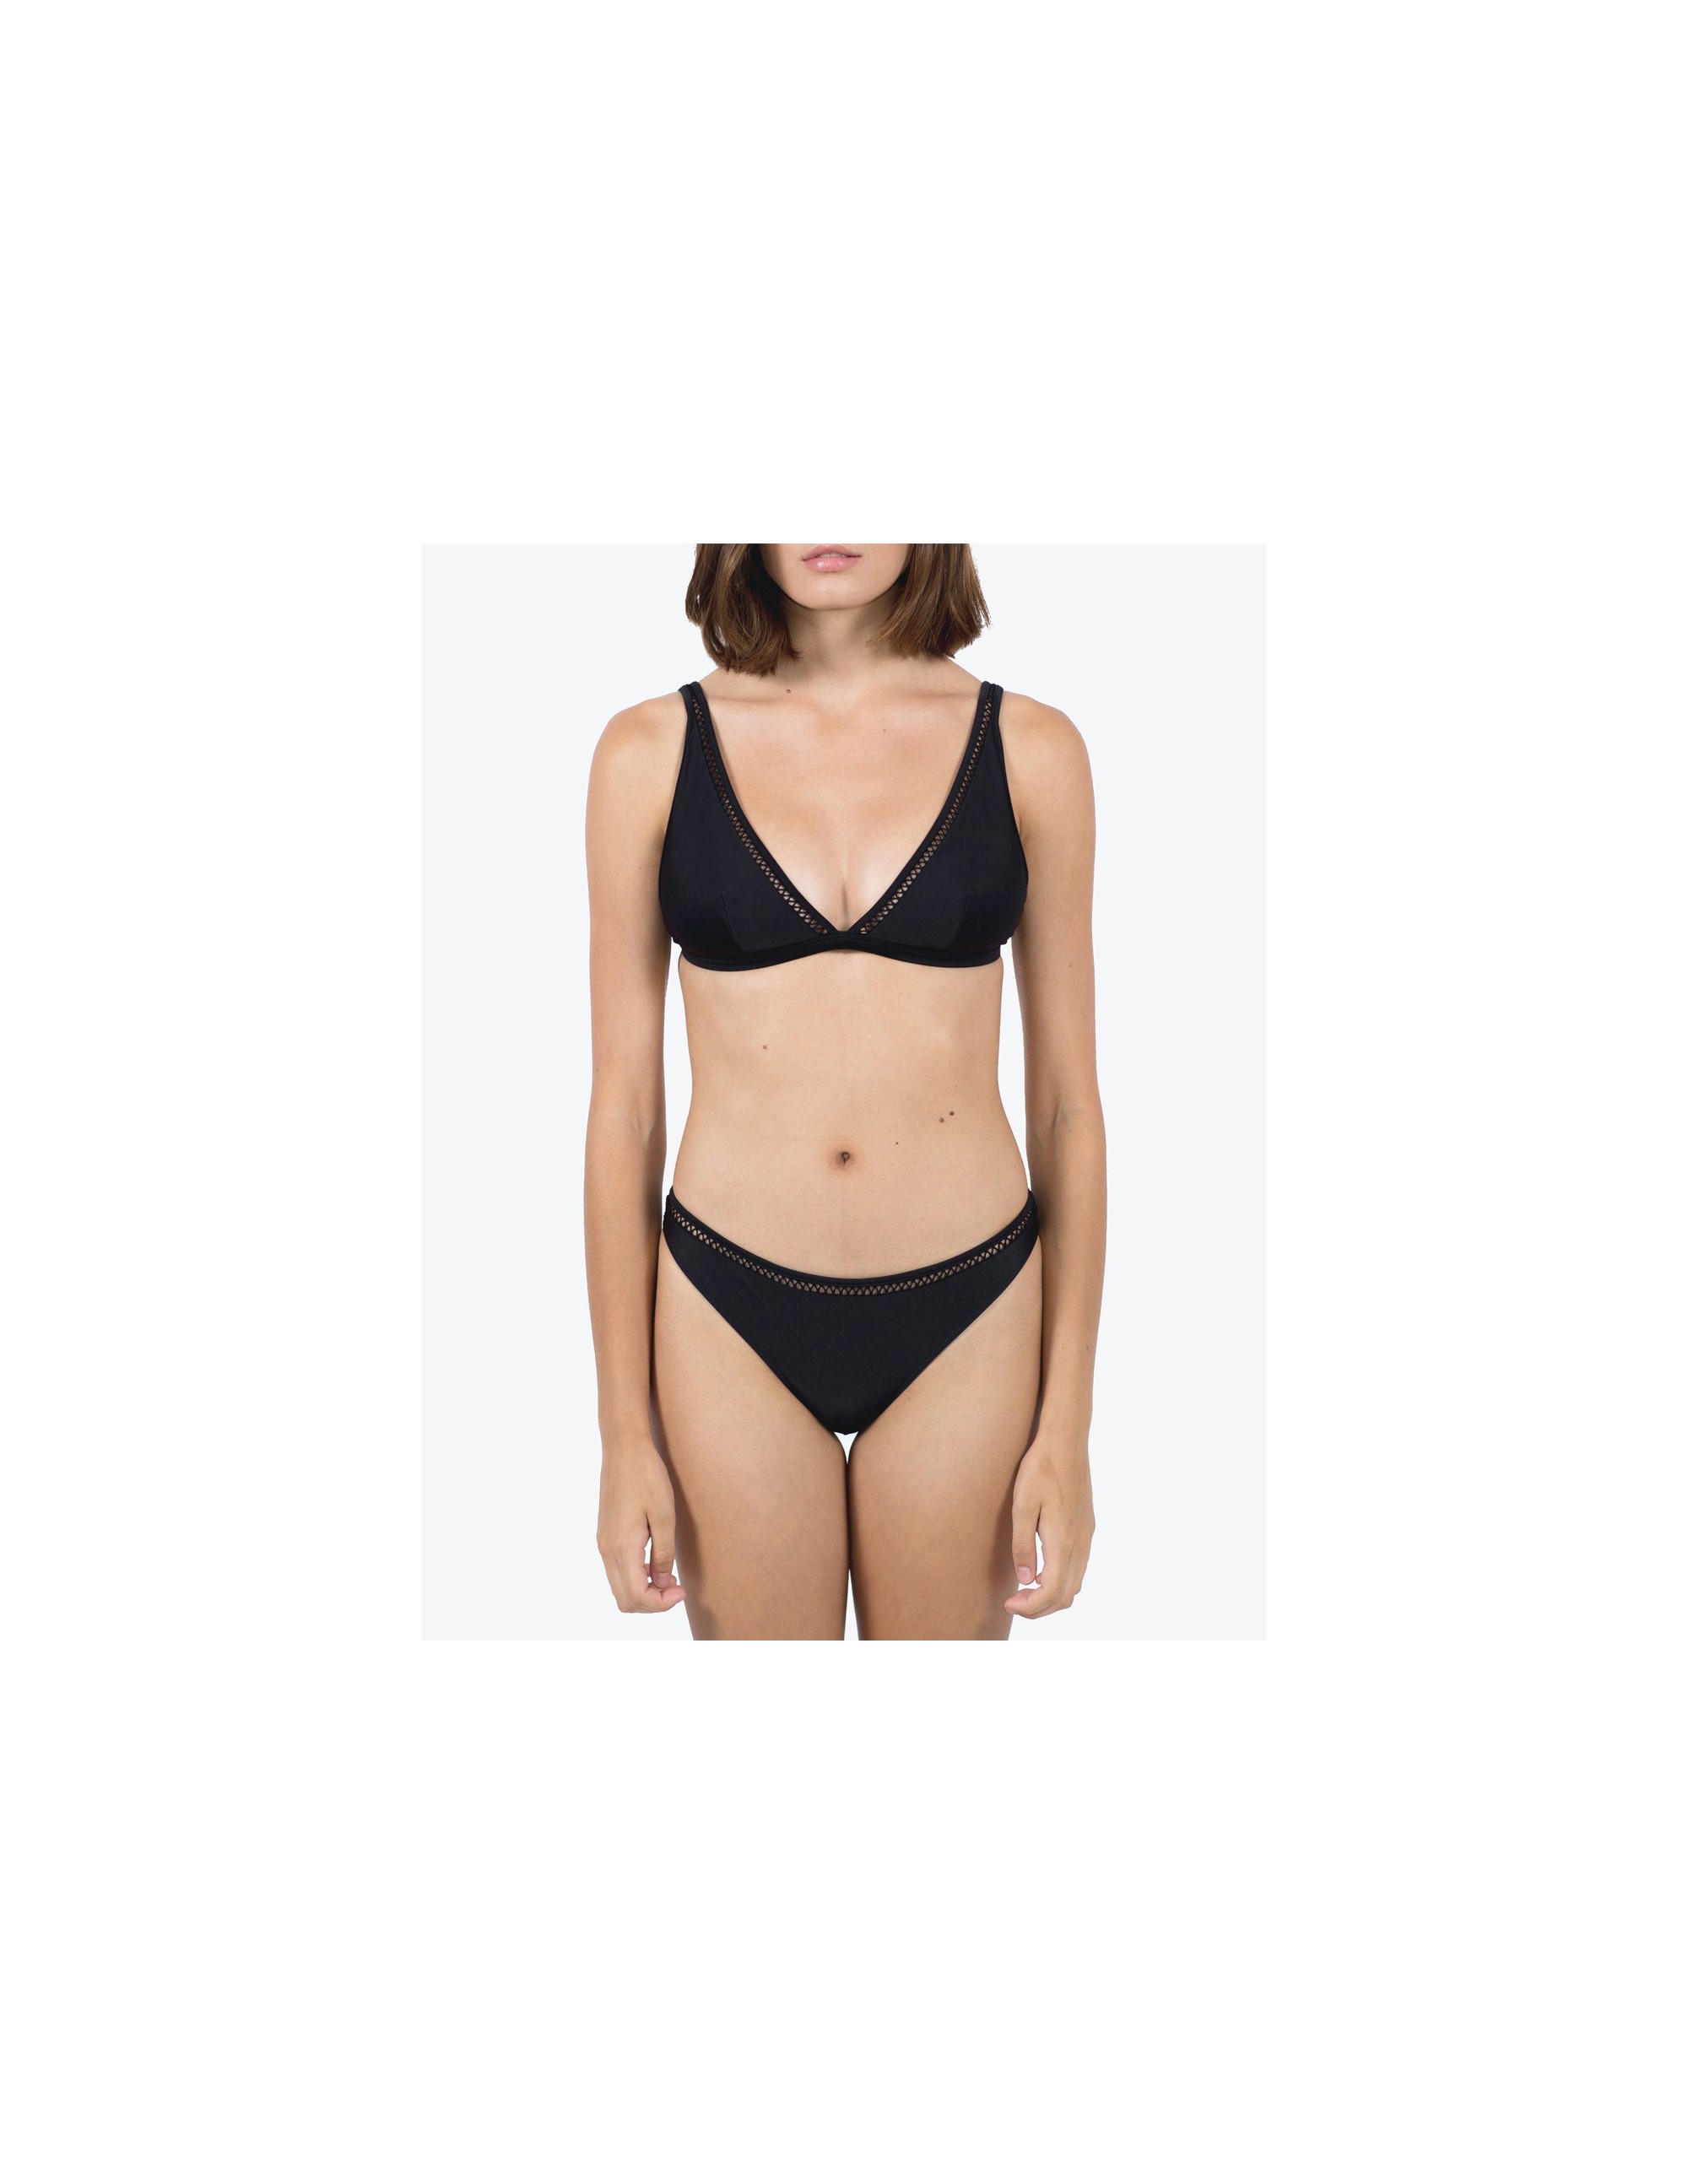 BELLA bikini bottom - MATTE BLACK